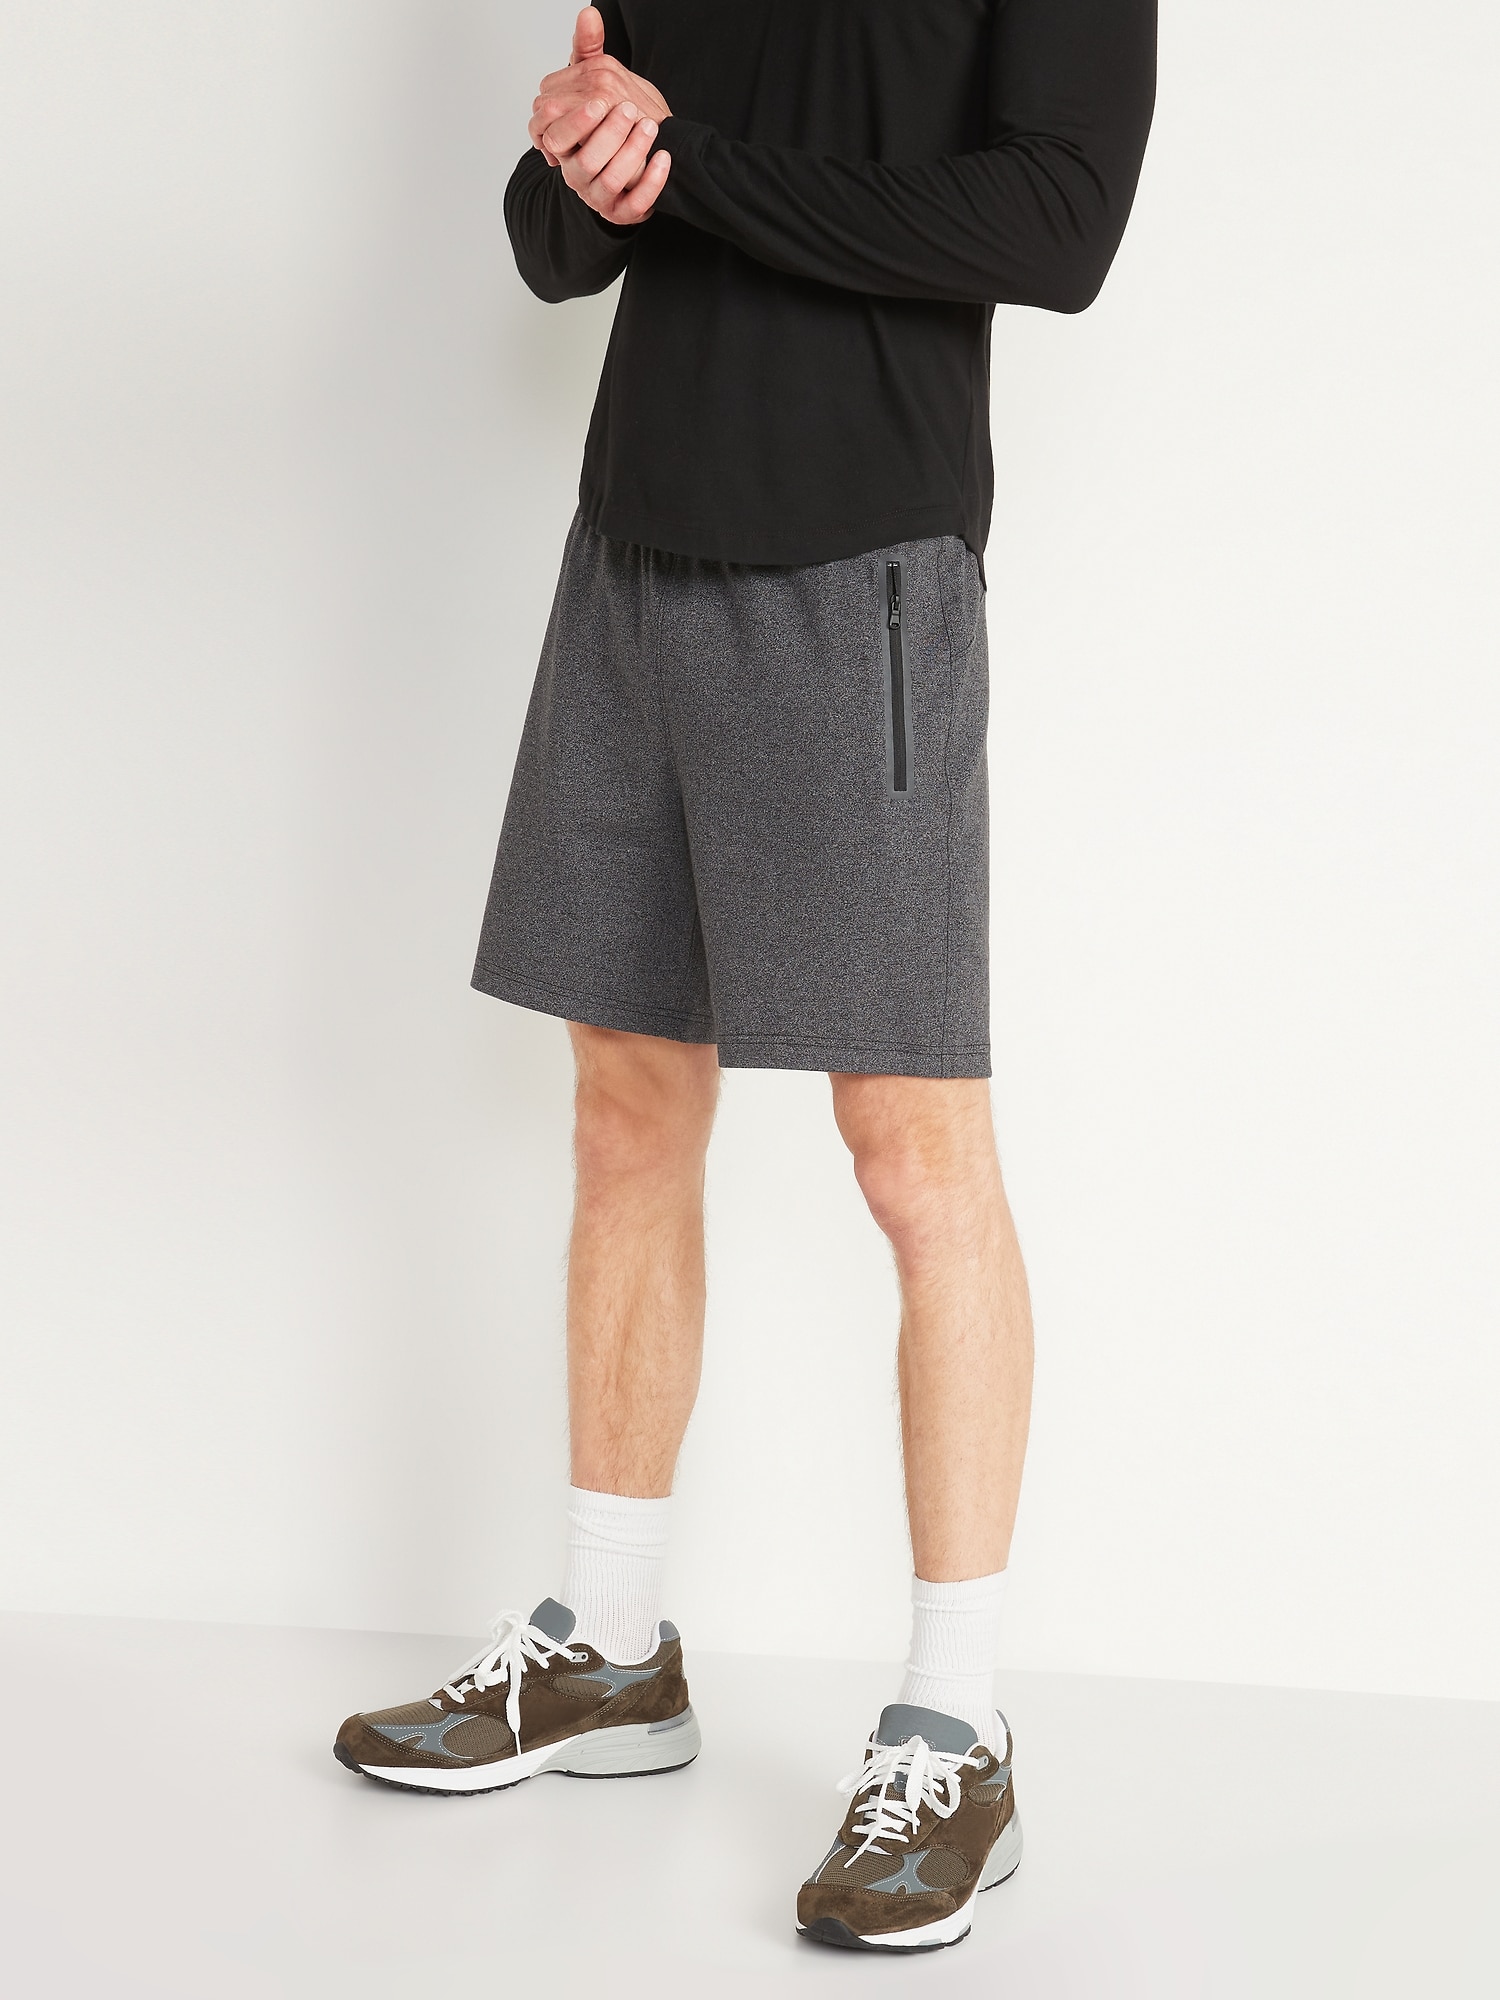 Old Navy Dynamic Fleece Sweat Shorts for Men --7-inch inseam gray. 1